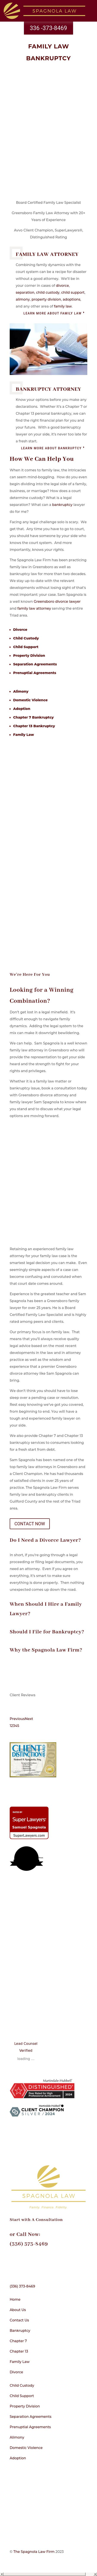 The Spagnola Law Firm - Greensboro NC Lawyers